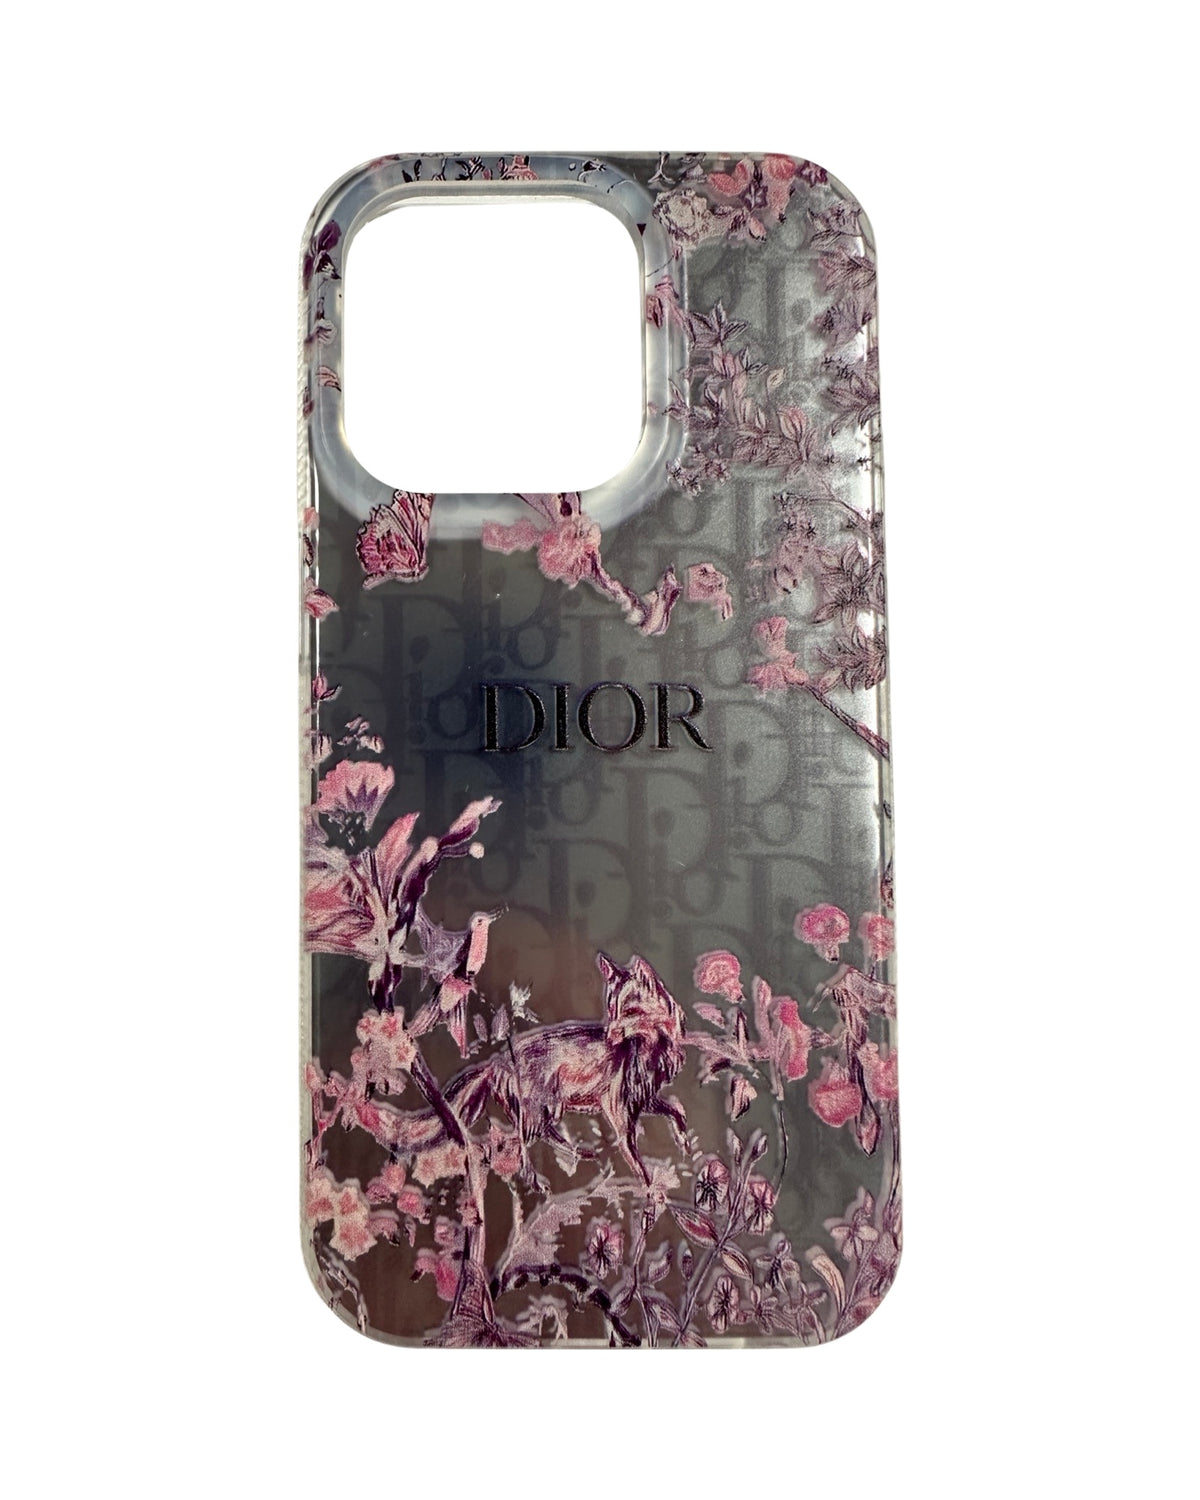 CaseNerd "Dio Floral" iPhone Case